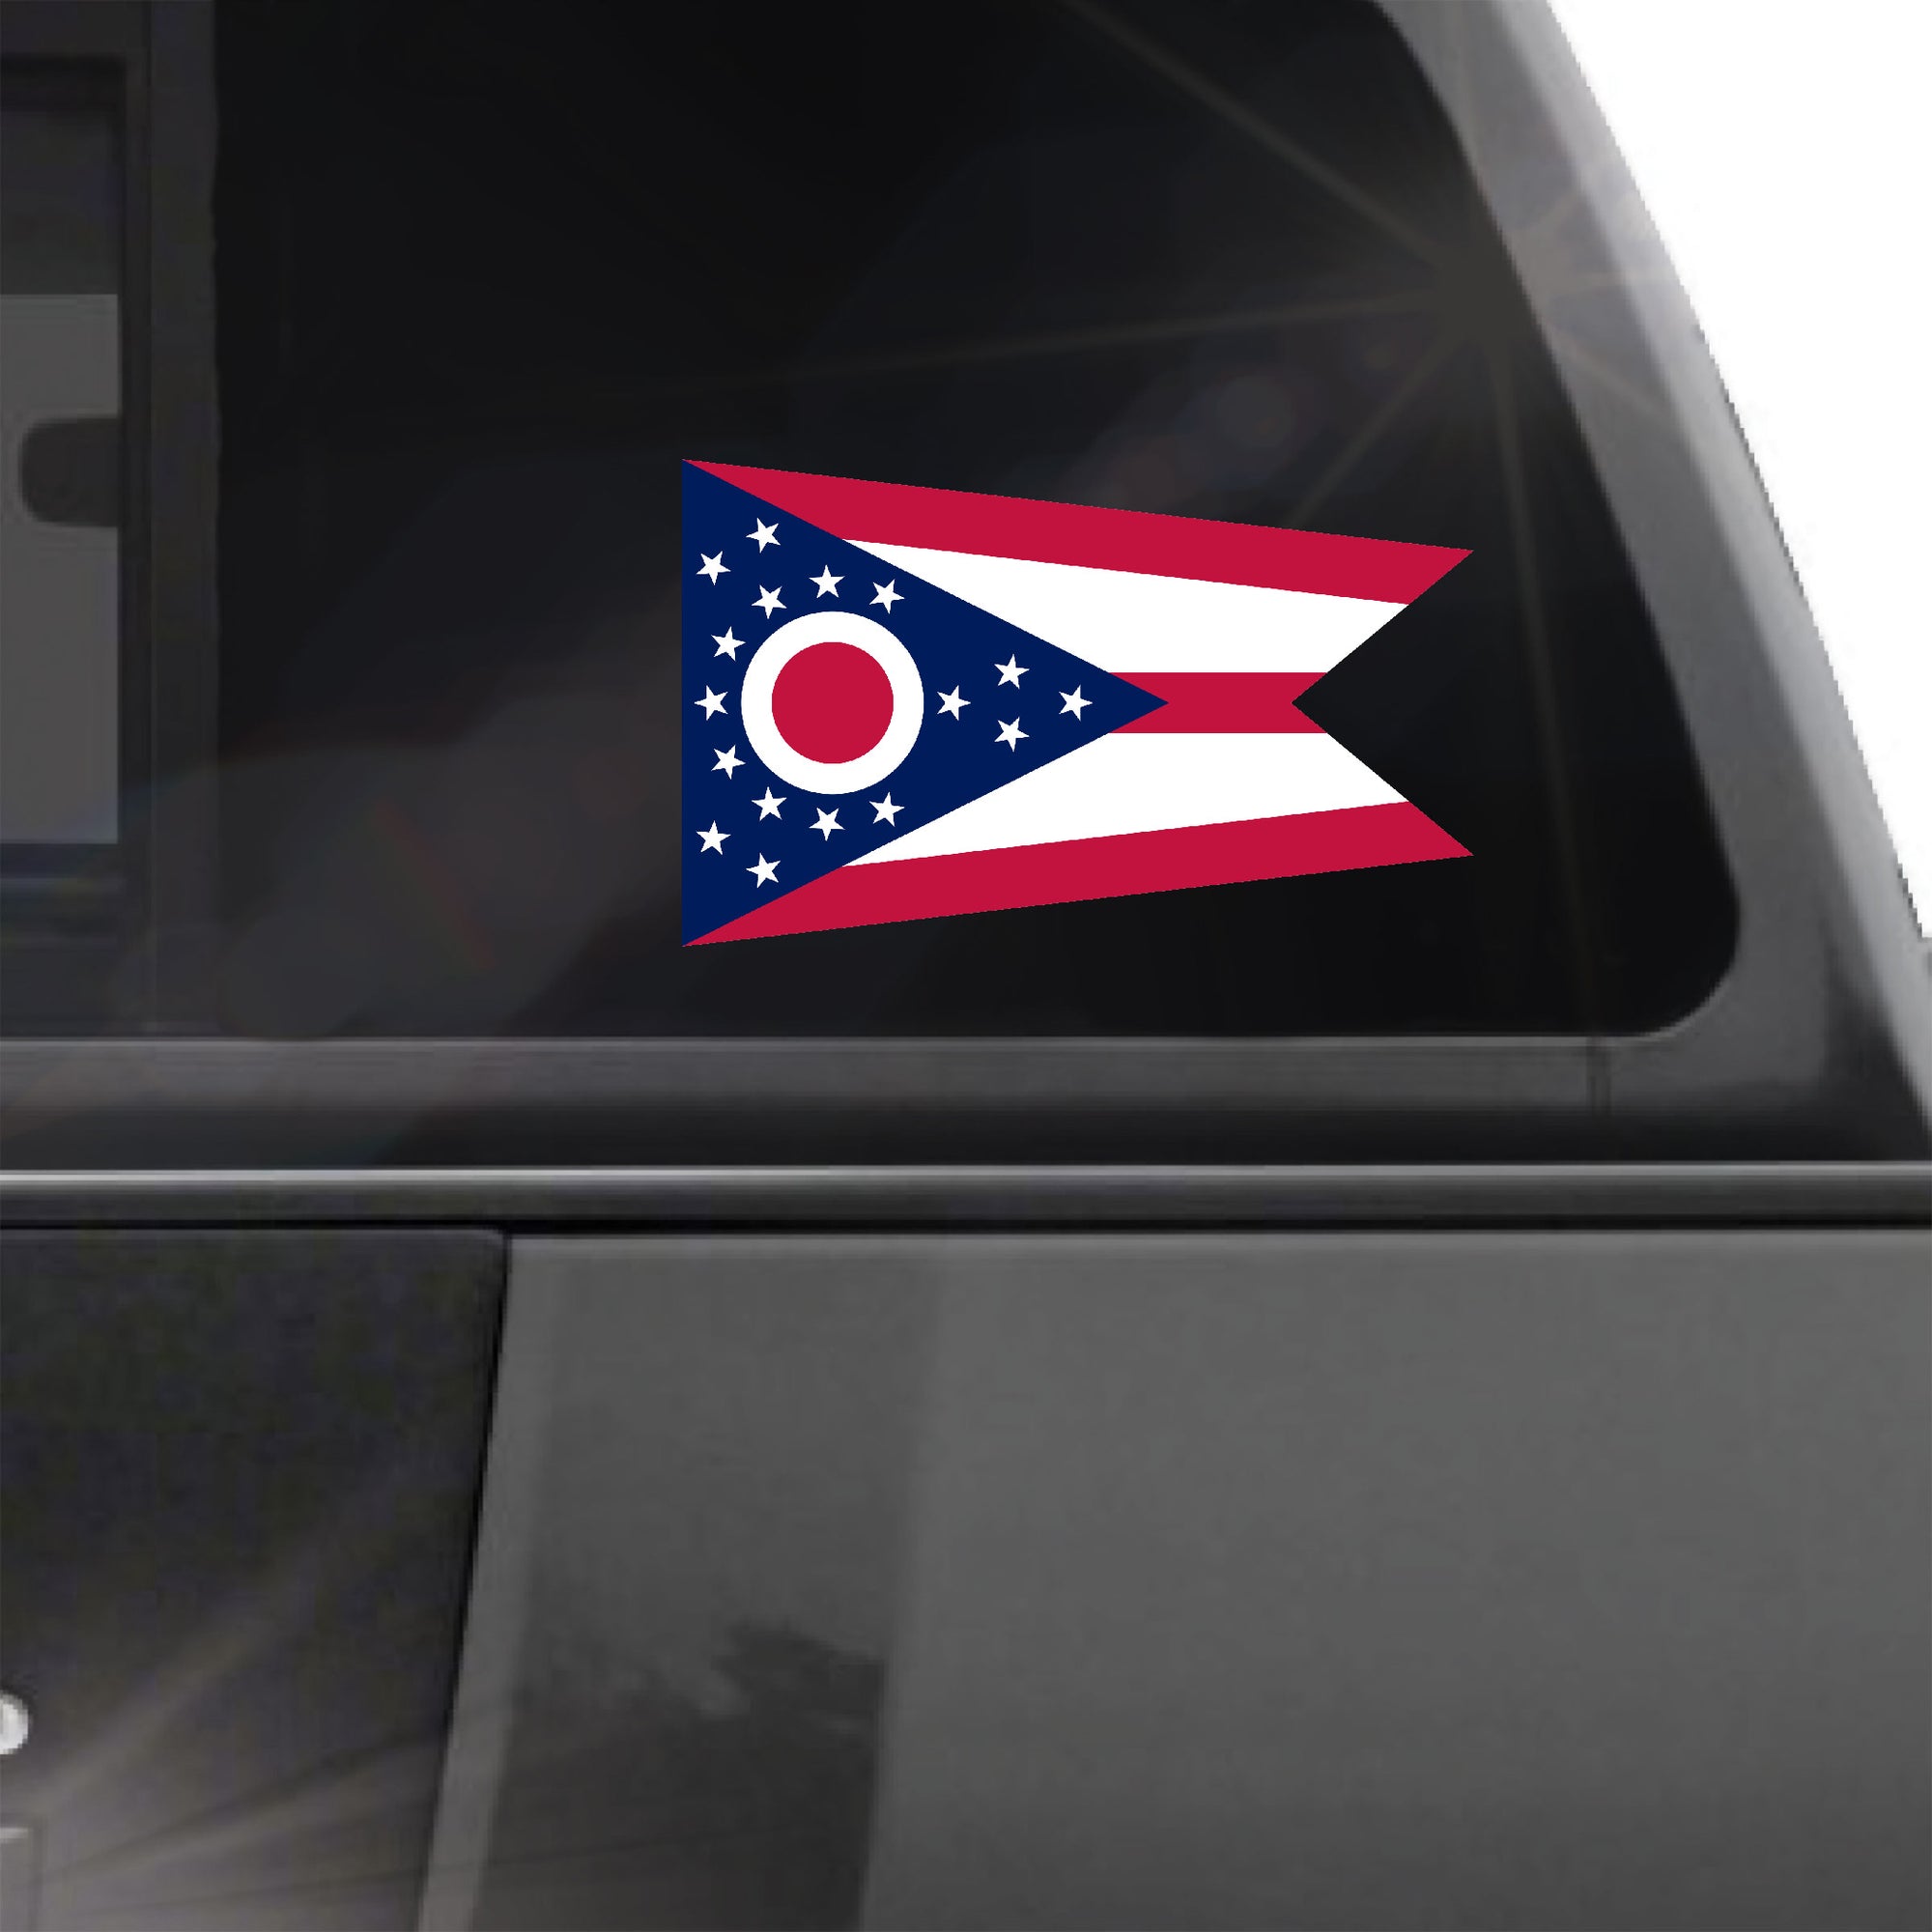 Ohio state flag sticker